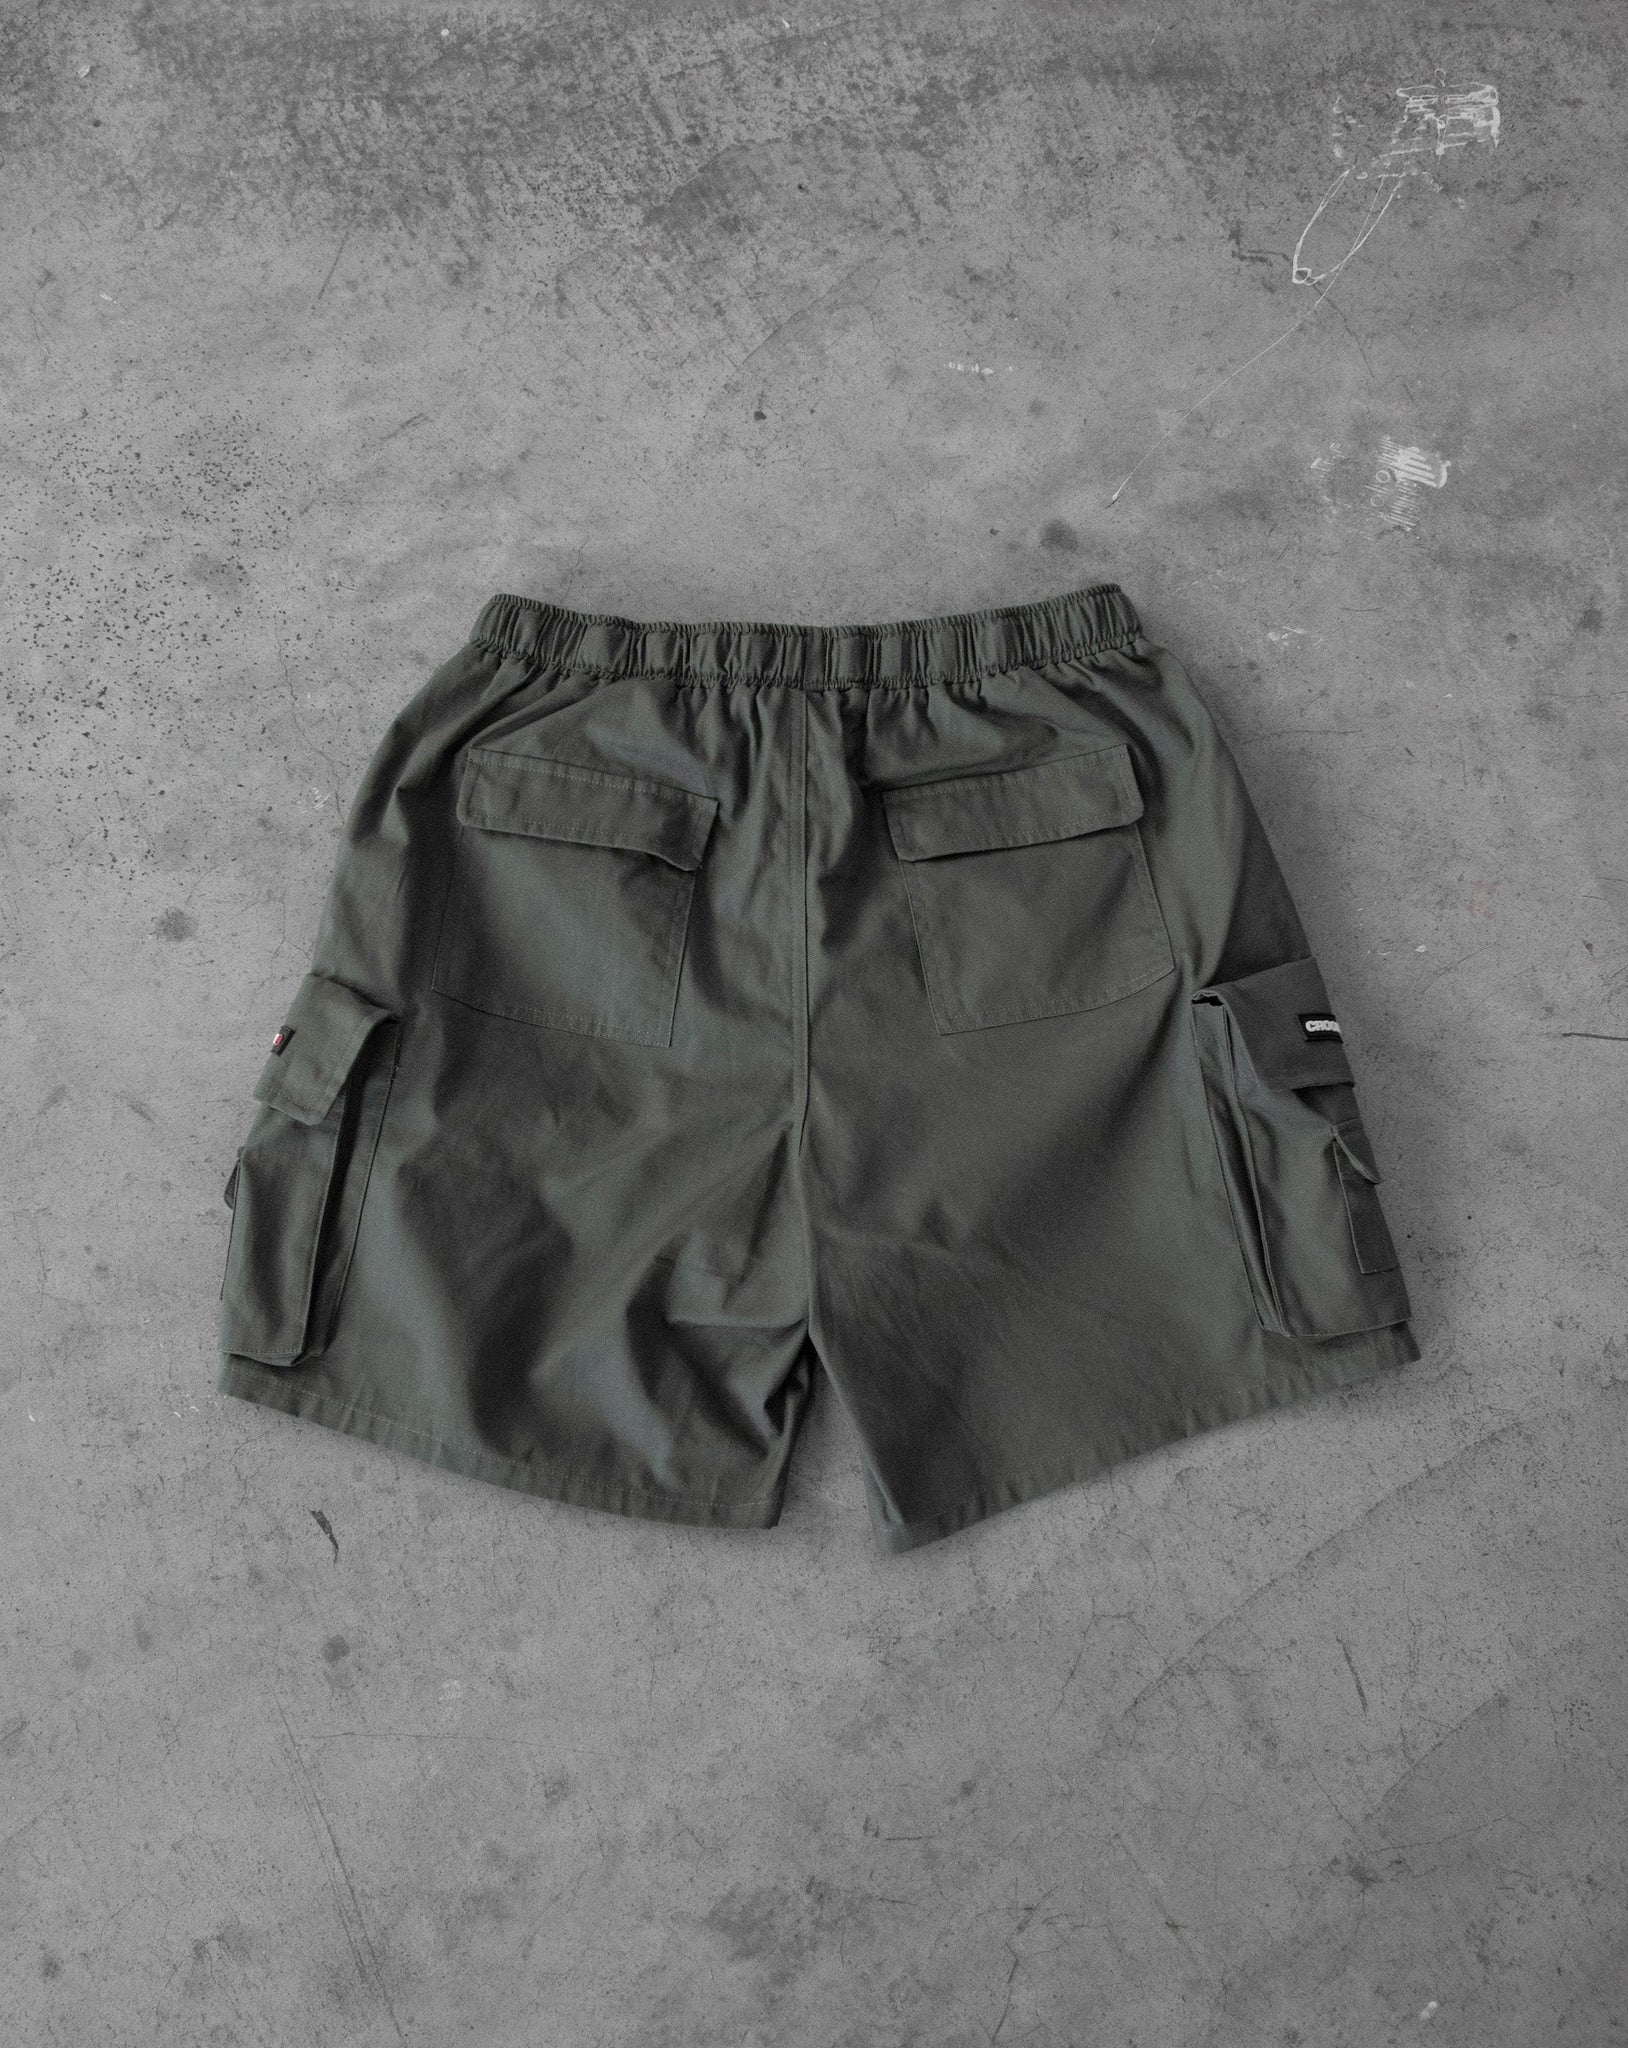 (New) Cargo Shorts - Khaki Green